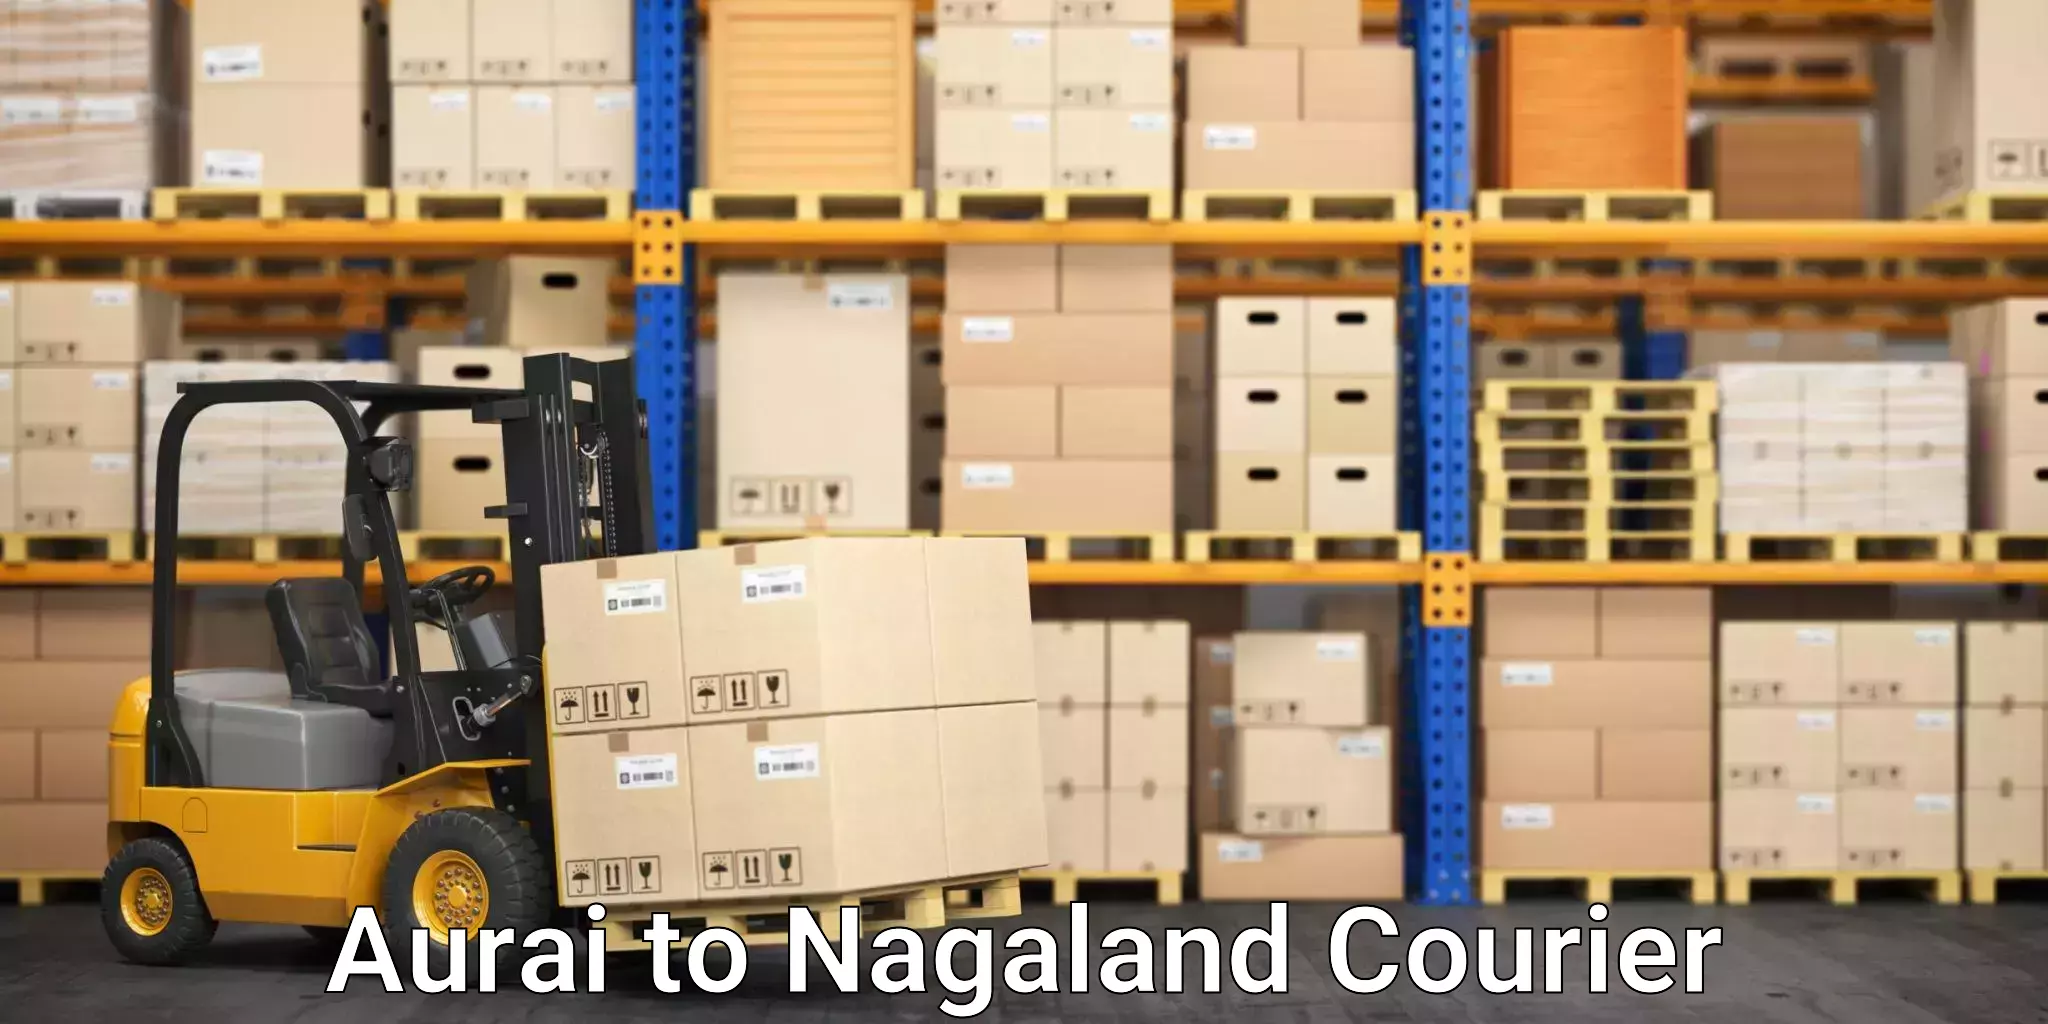 Professional moving company Aurai to Nagaland